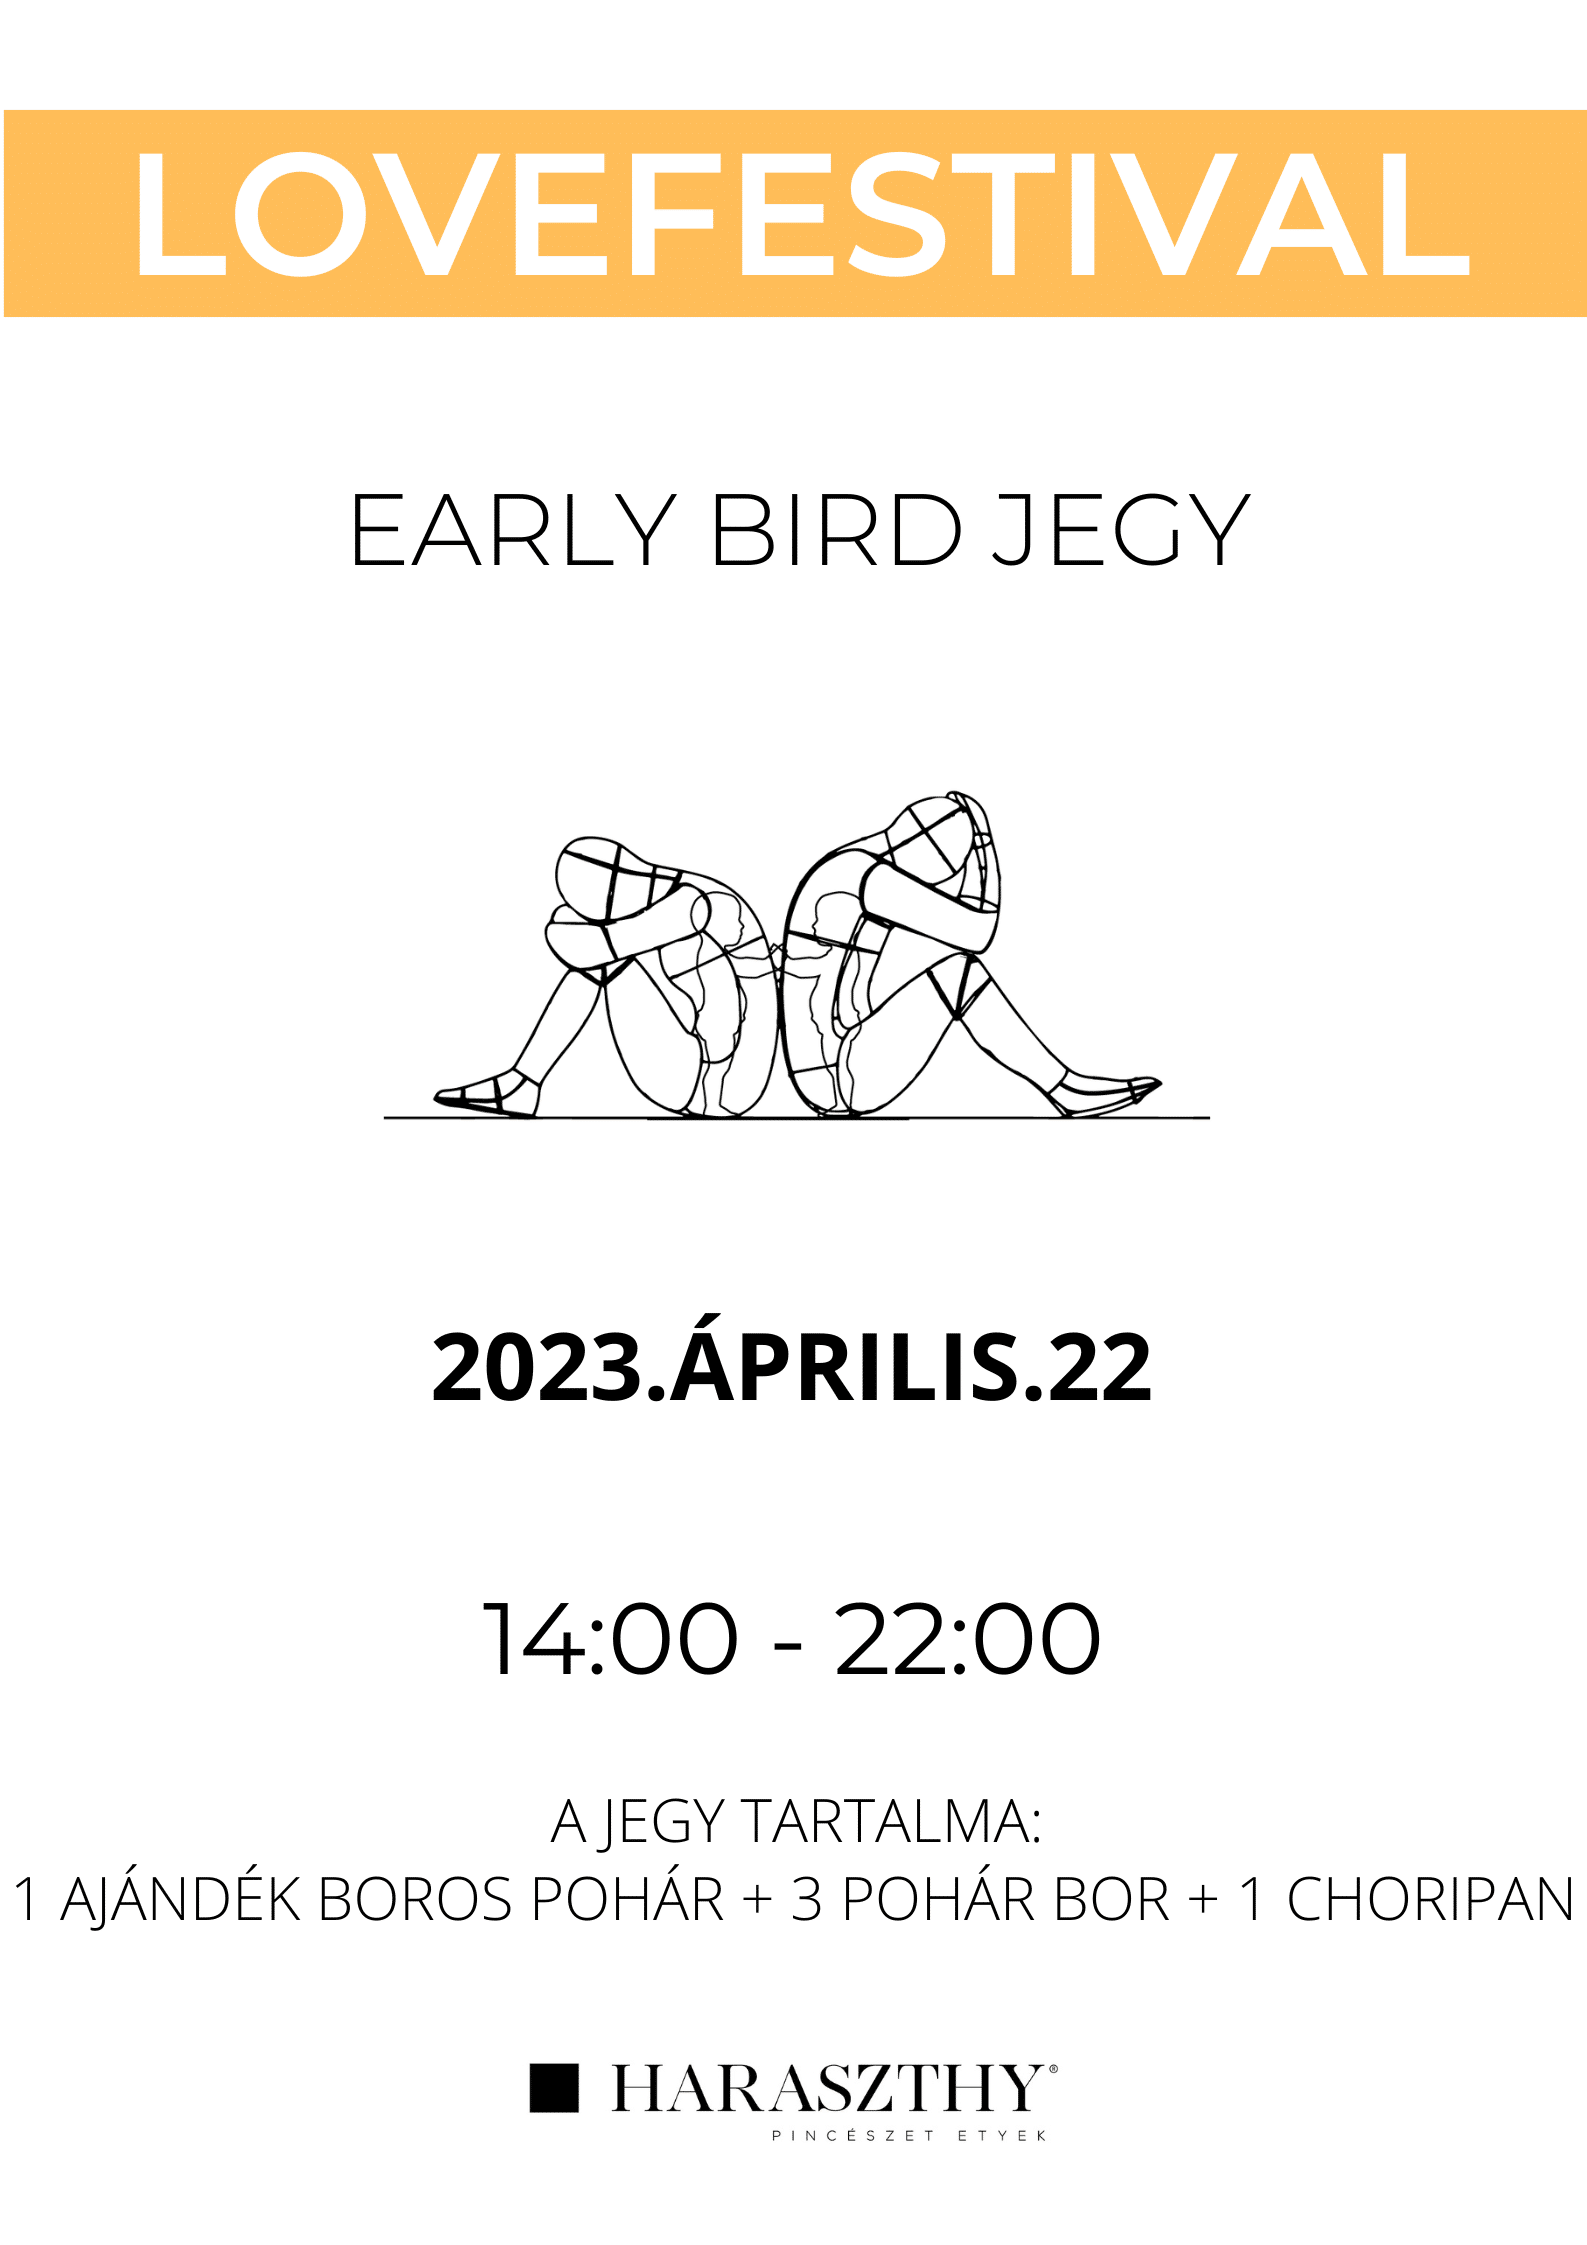 LOVEFESTIVAL 2023 / Early Bird Ticket